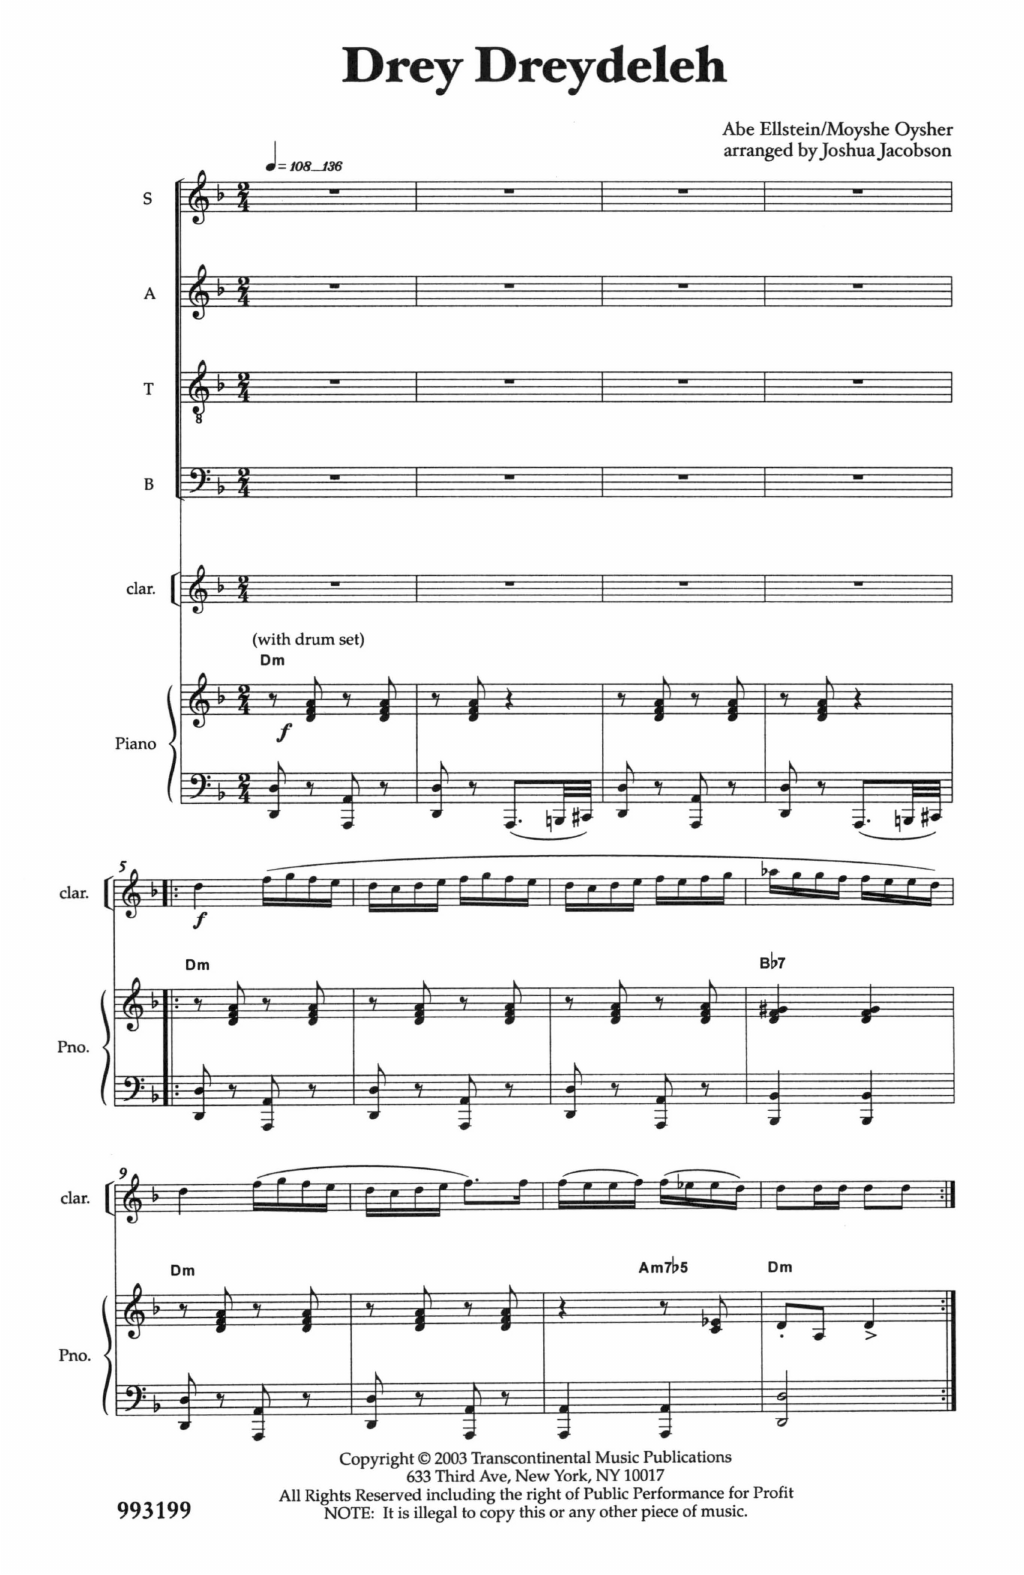 Joshua Jacobson Drey Dreydeleh (Spin, Little Dreydl) Sheet Music Notes & Chords for SATB Choir - Download or Print PDF